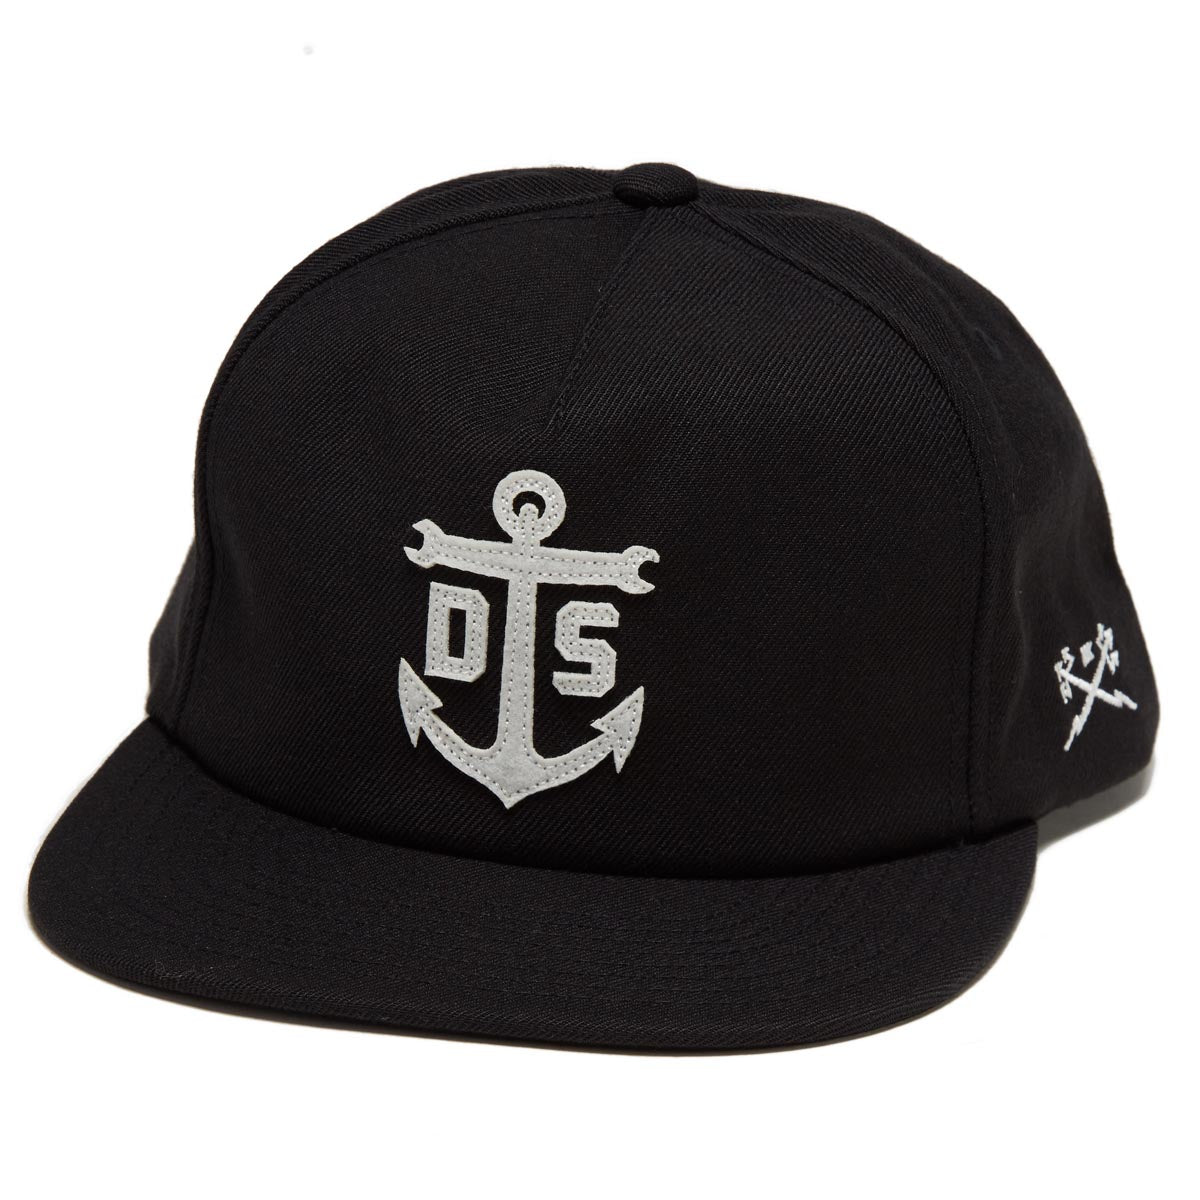 Dark Seas Gisler Hat - Black image 1